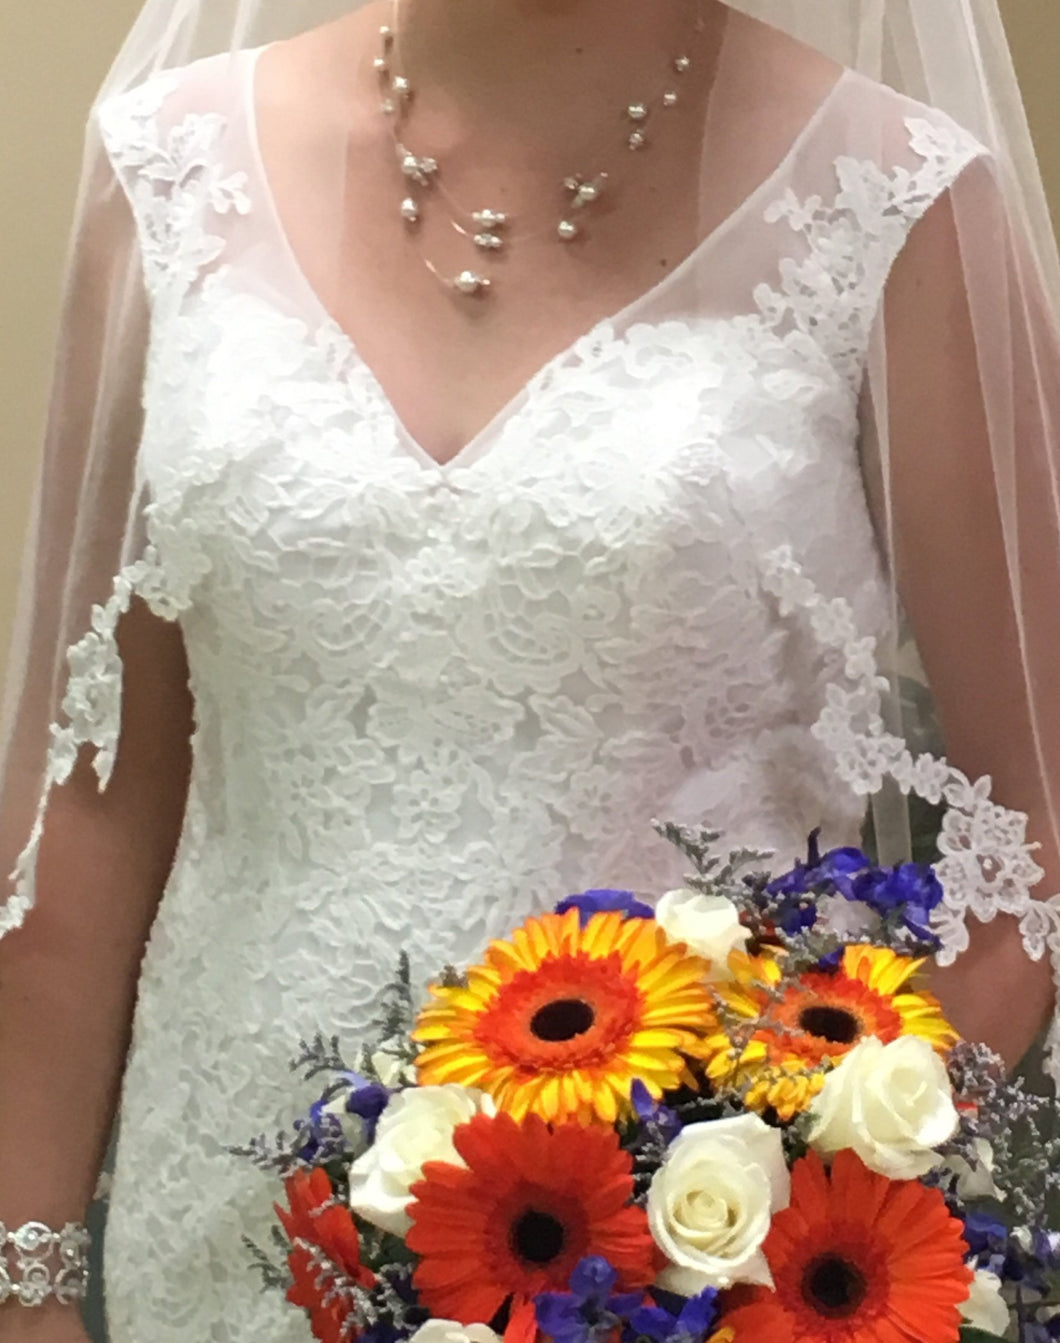 Mori Lee 'Madeline Gardener' size 10 new wedding dress front view on bride